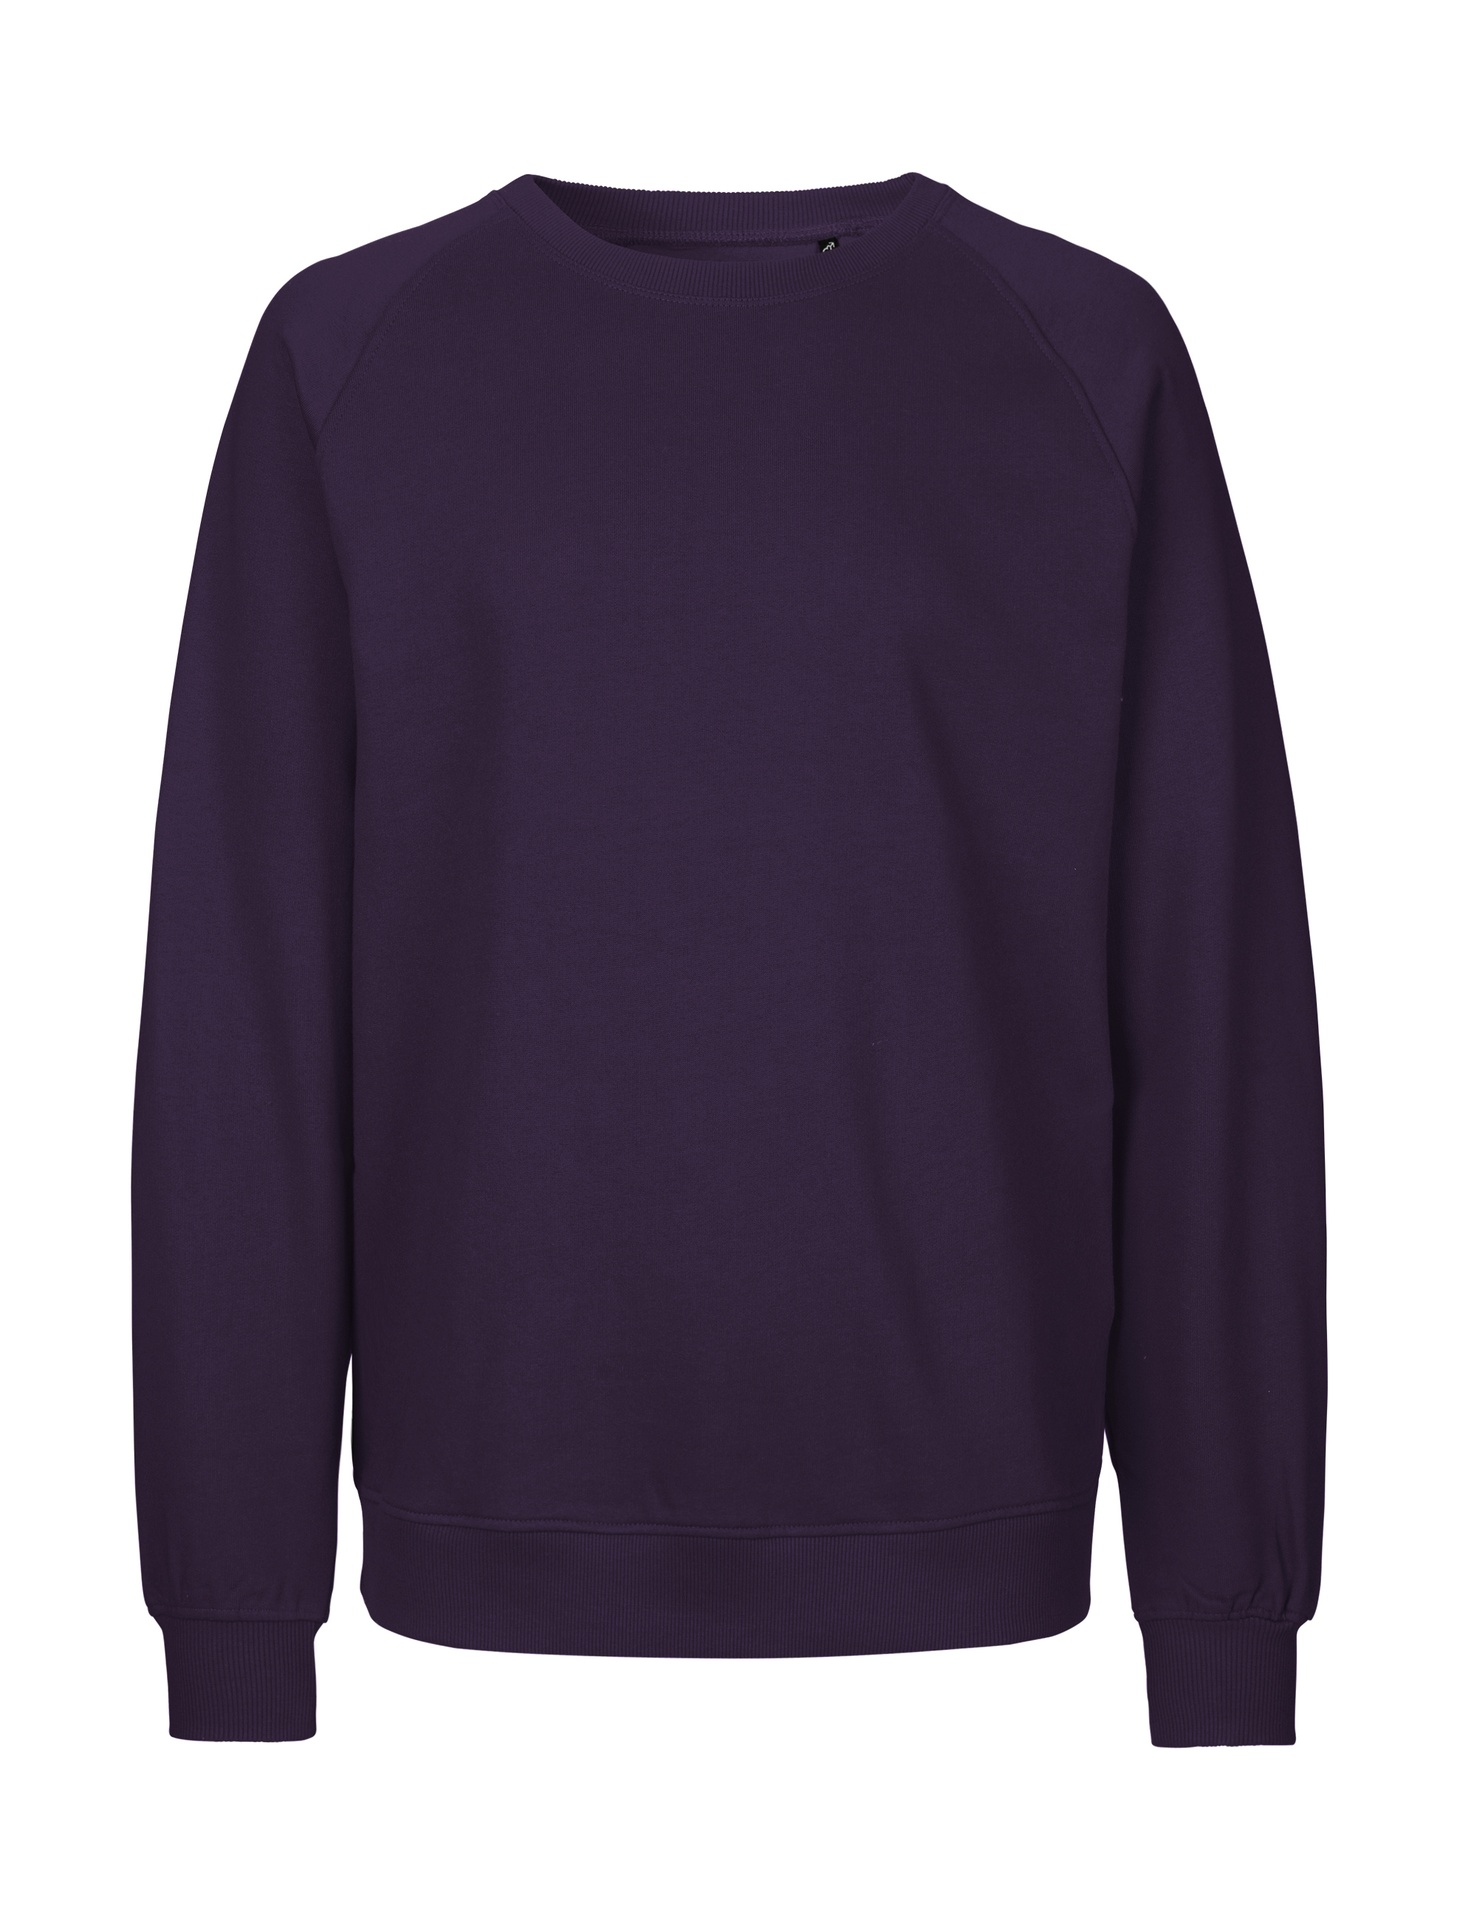 [PR/02896] Unisex Sweatshirt (Purple 81, S)